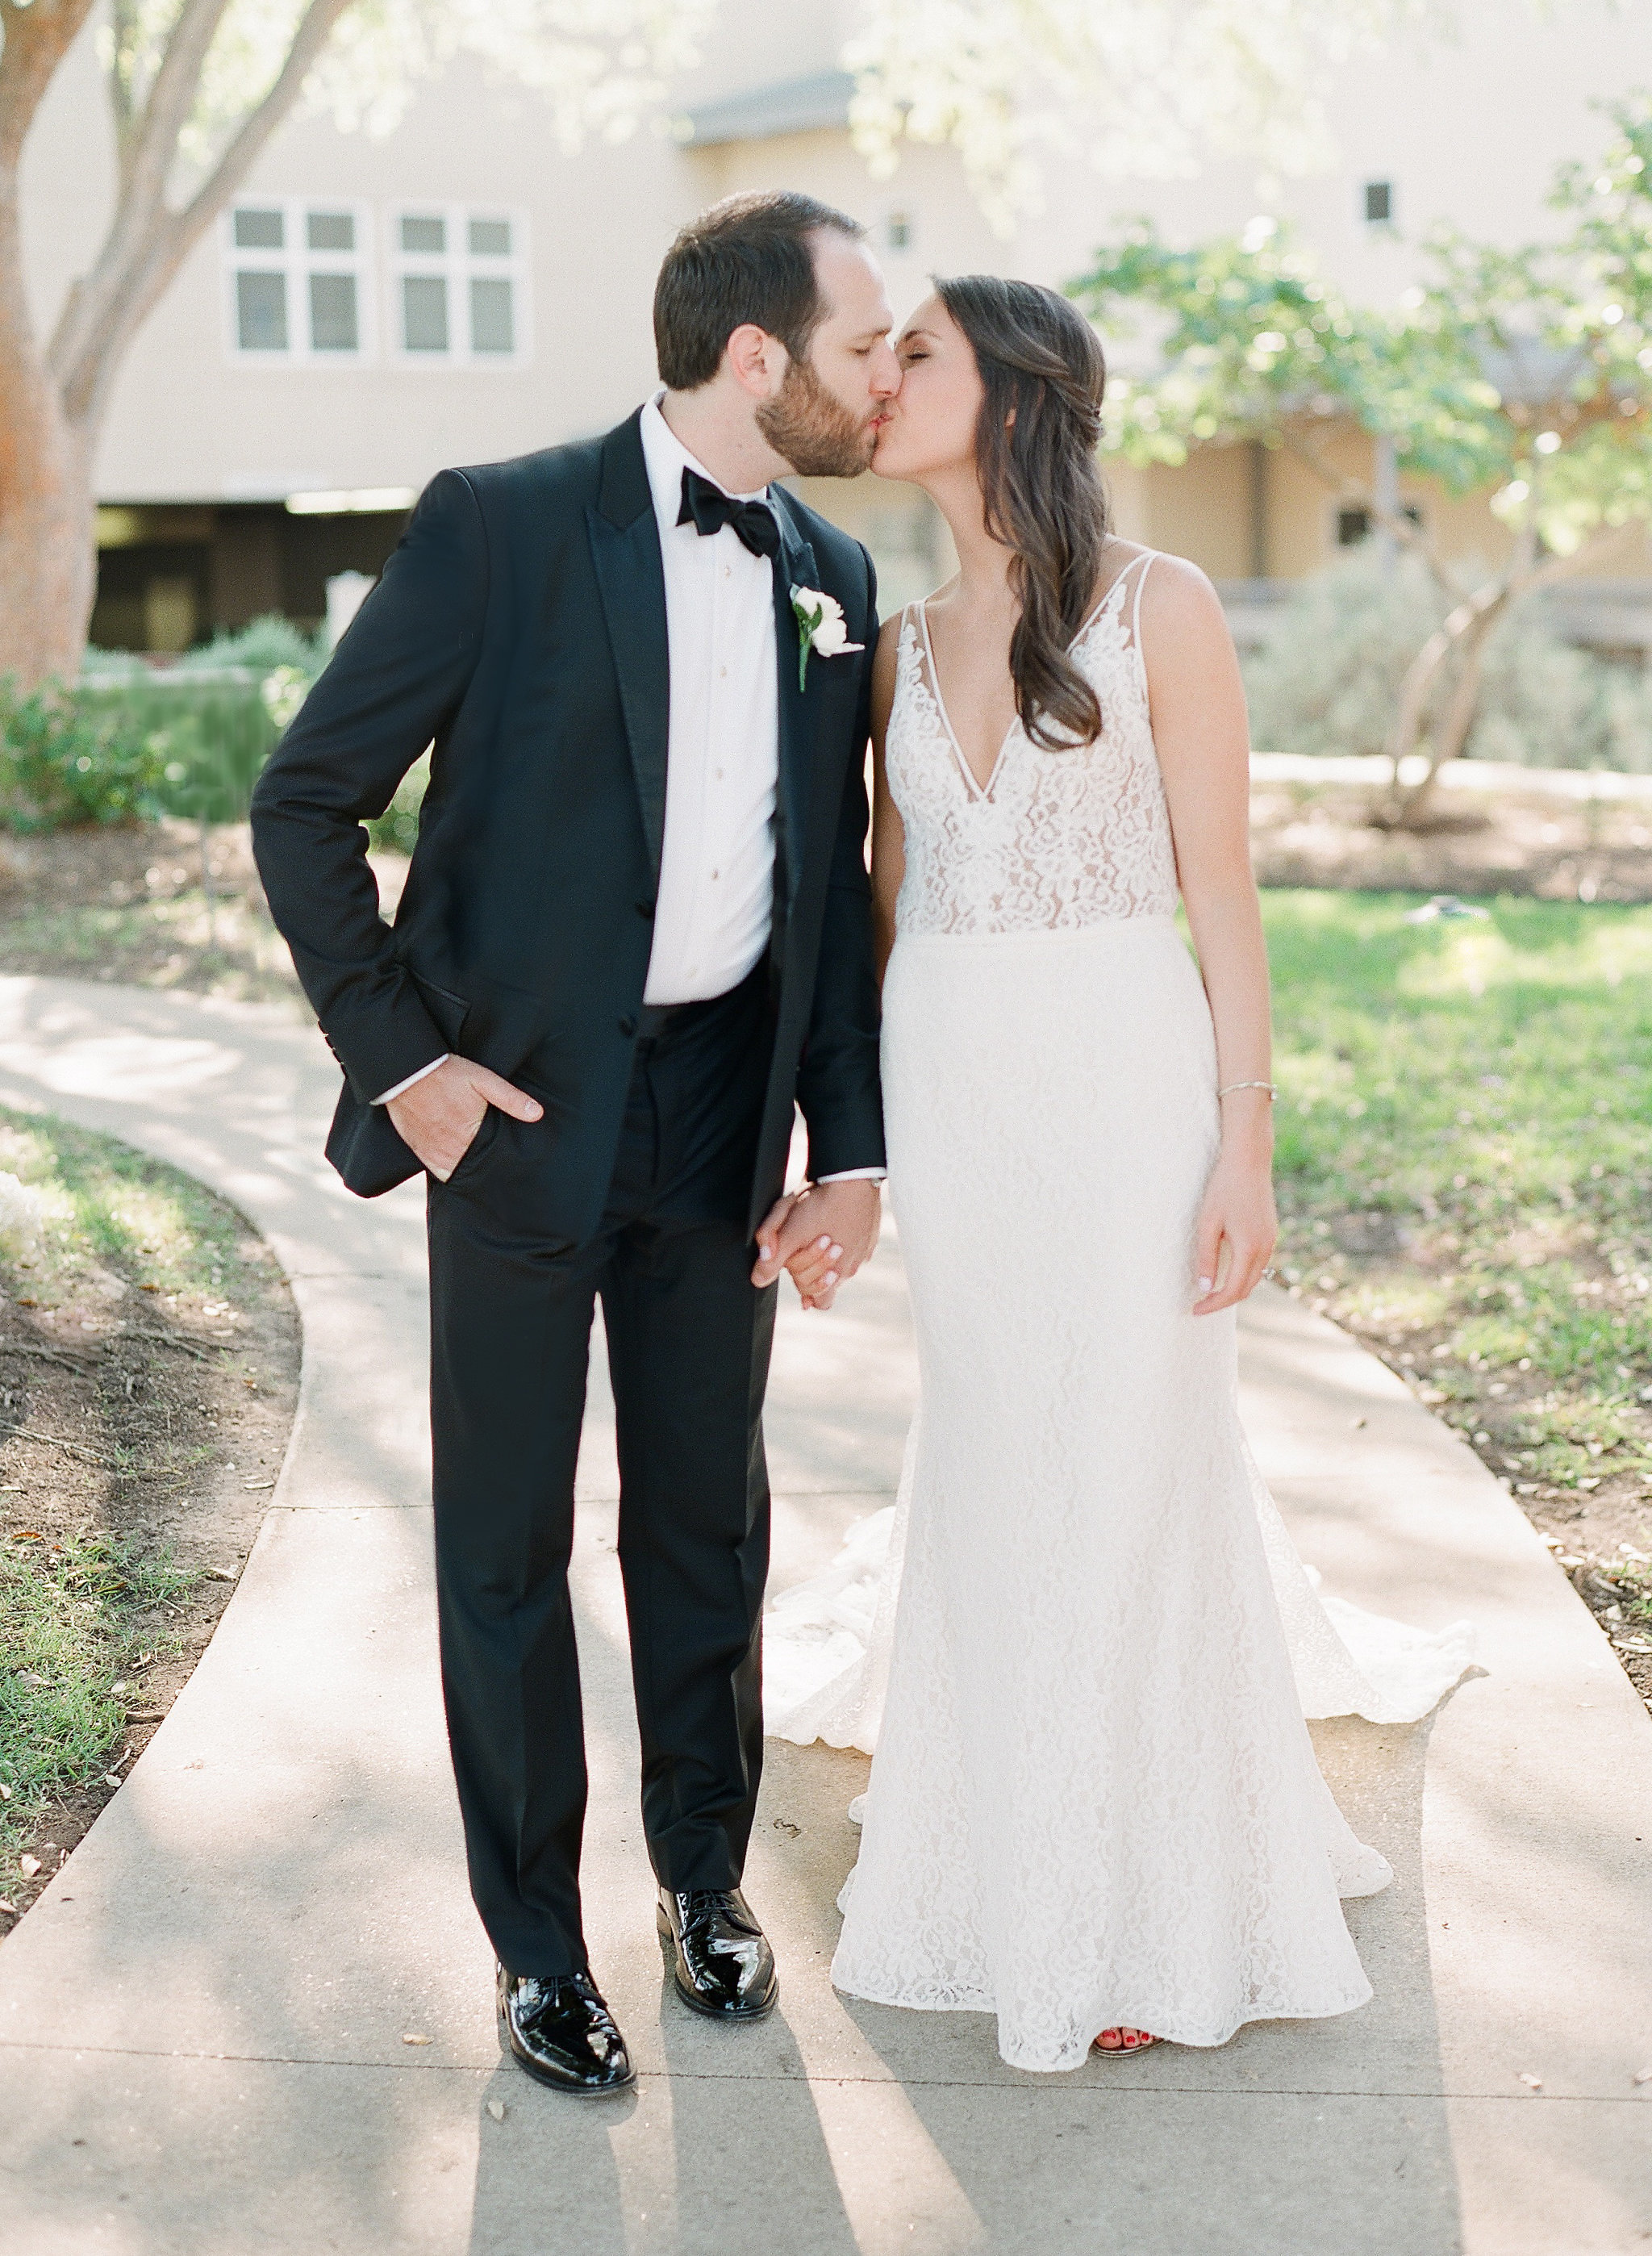 Jamie + Aaron — Events by Kristin – Dallas Wedding Planner & Coordinator